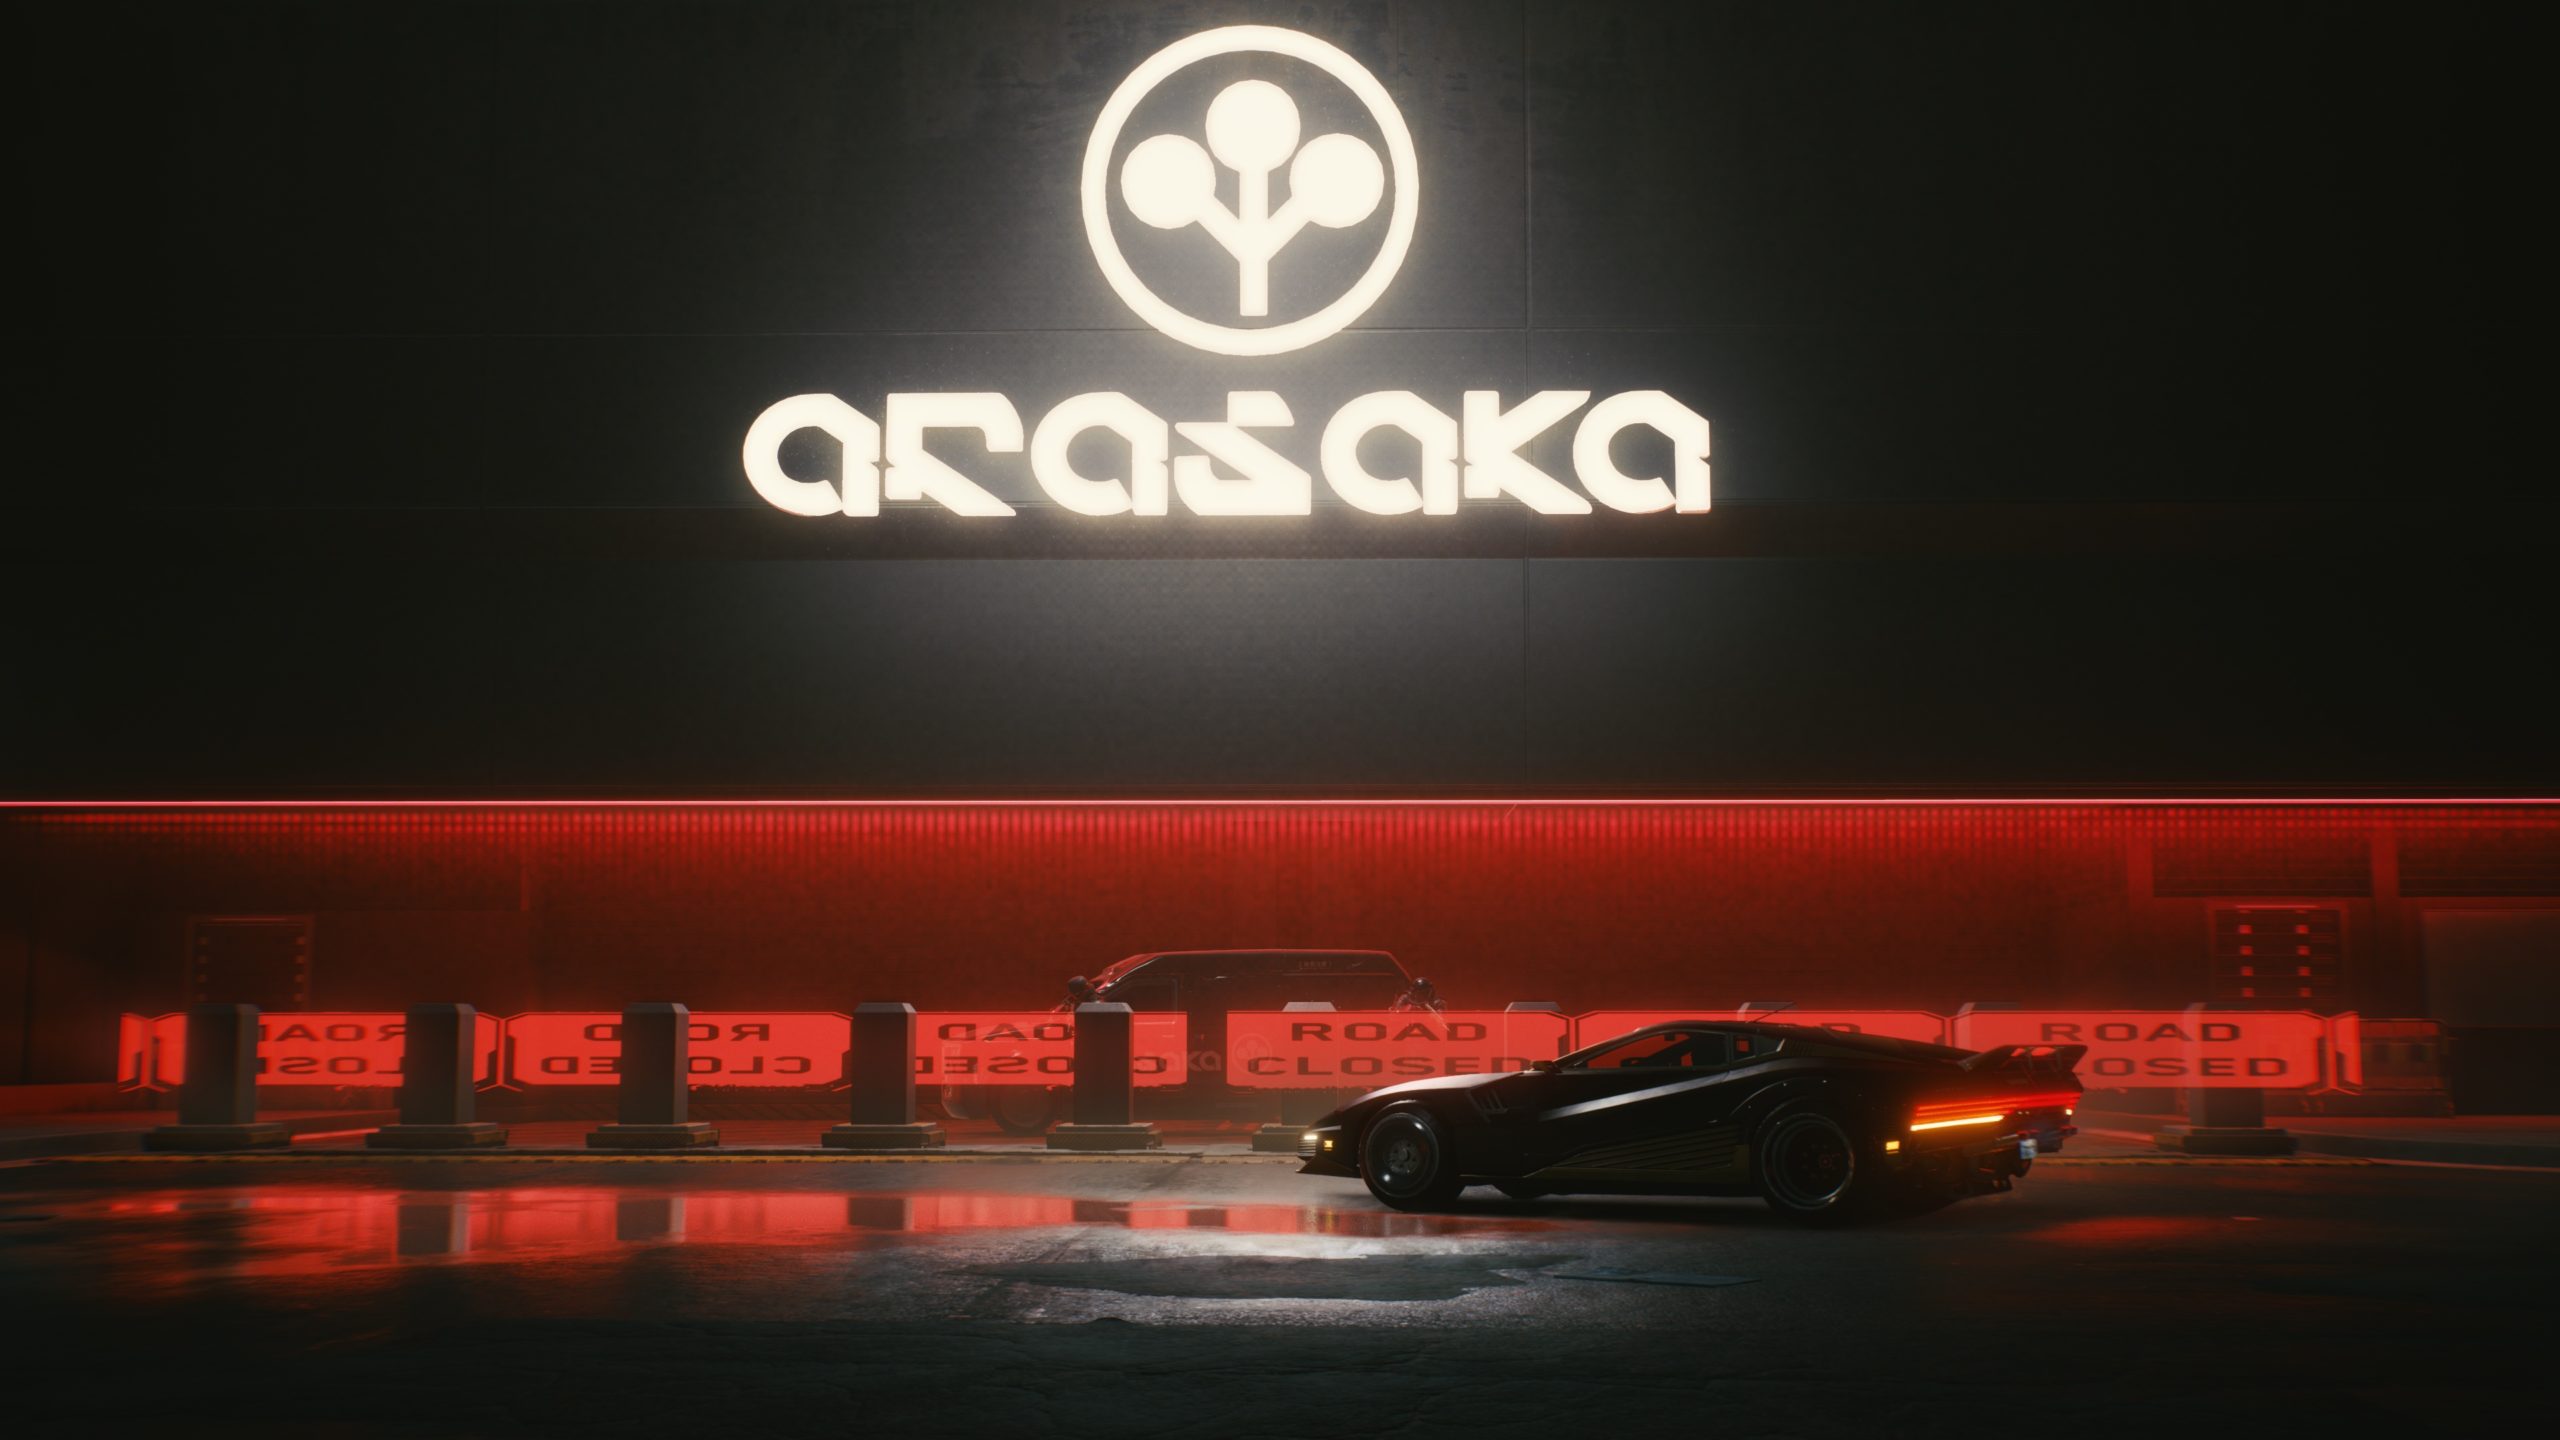 Fantastic Arasaka screenshot